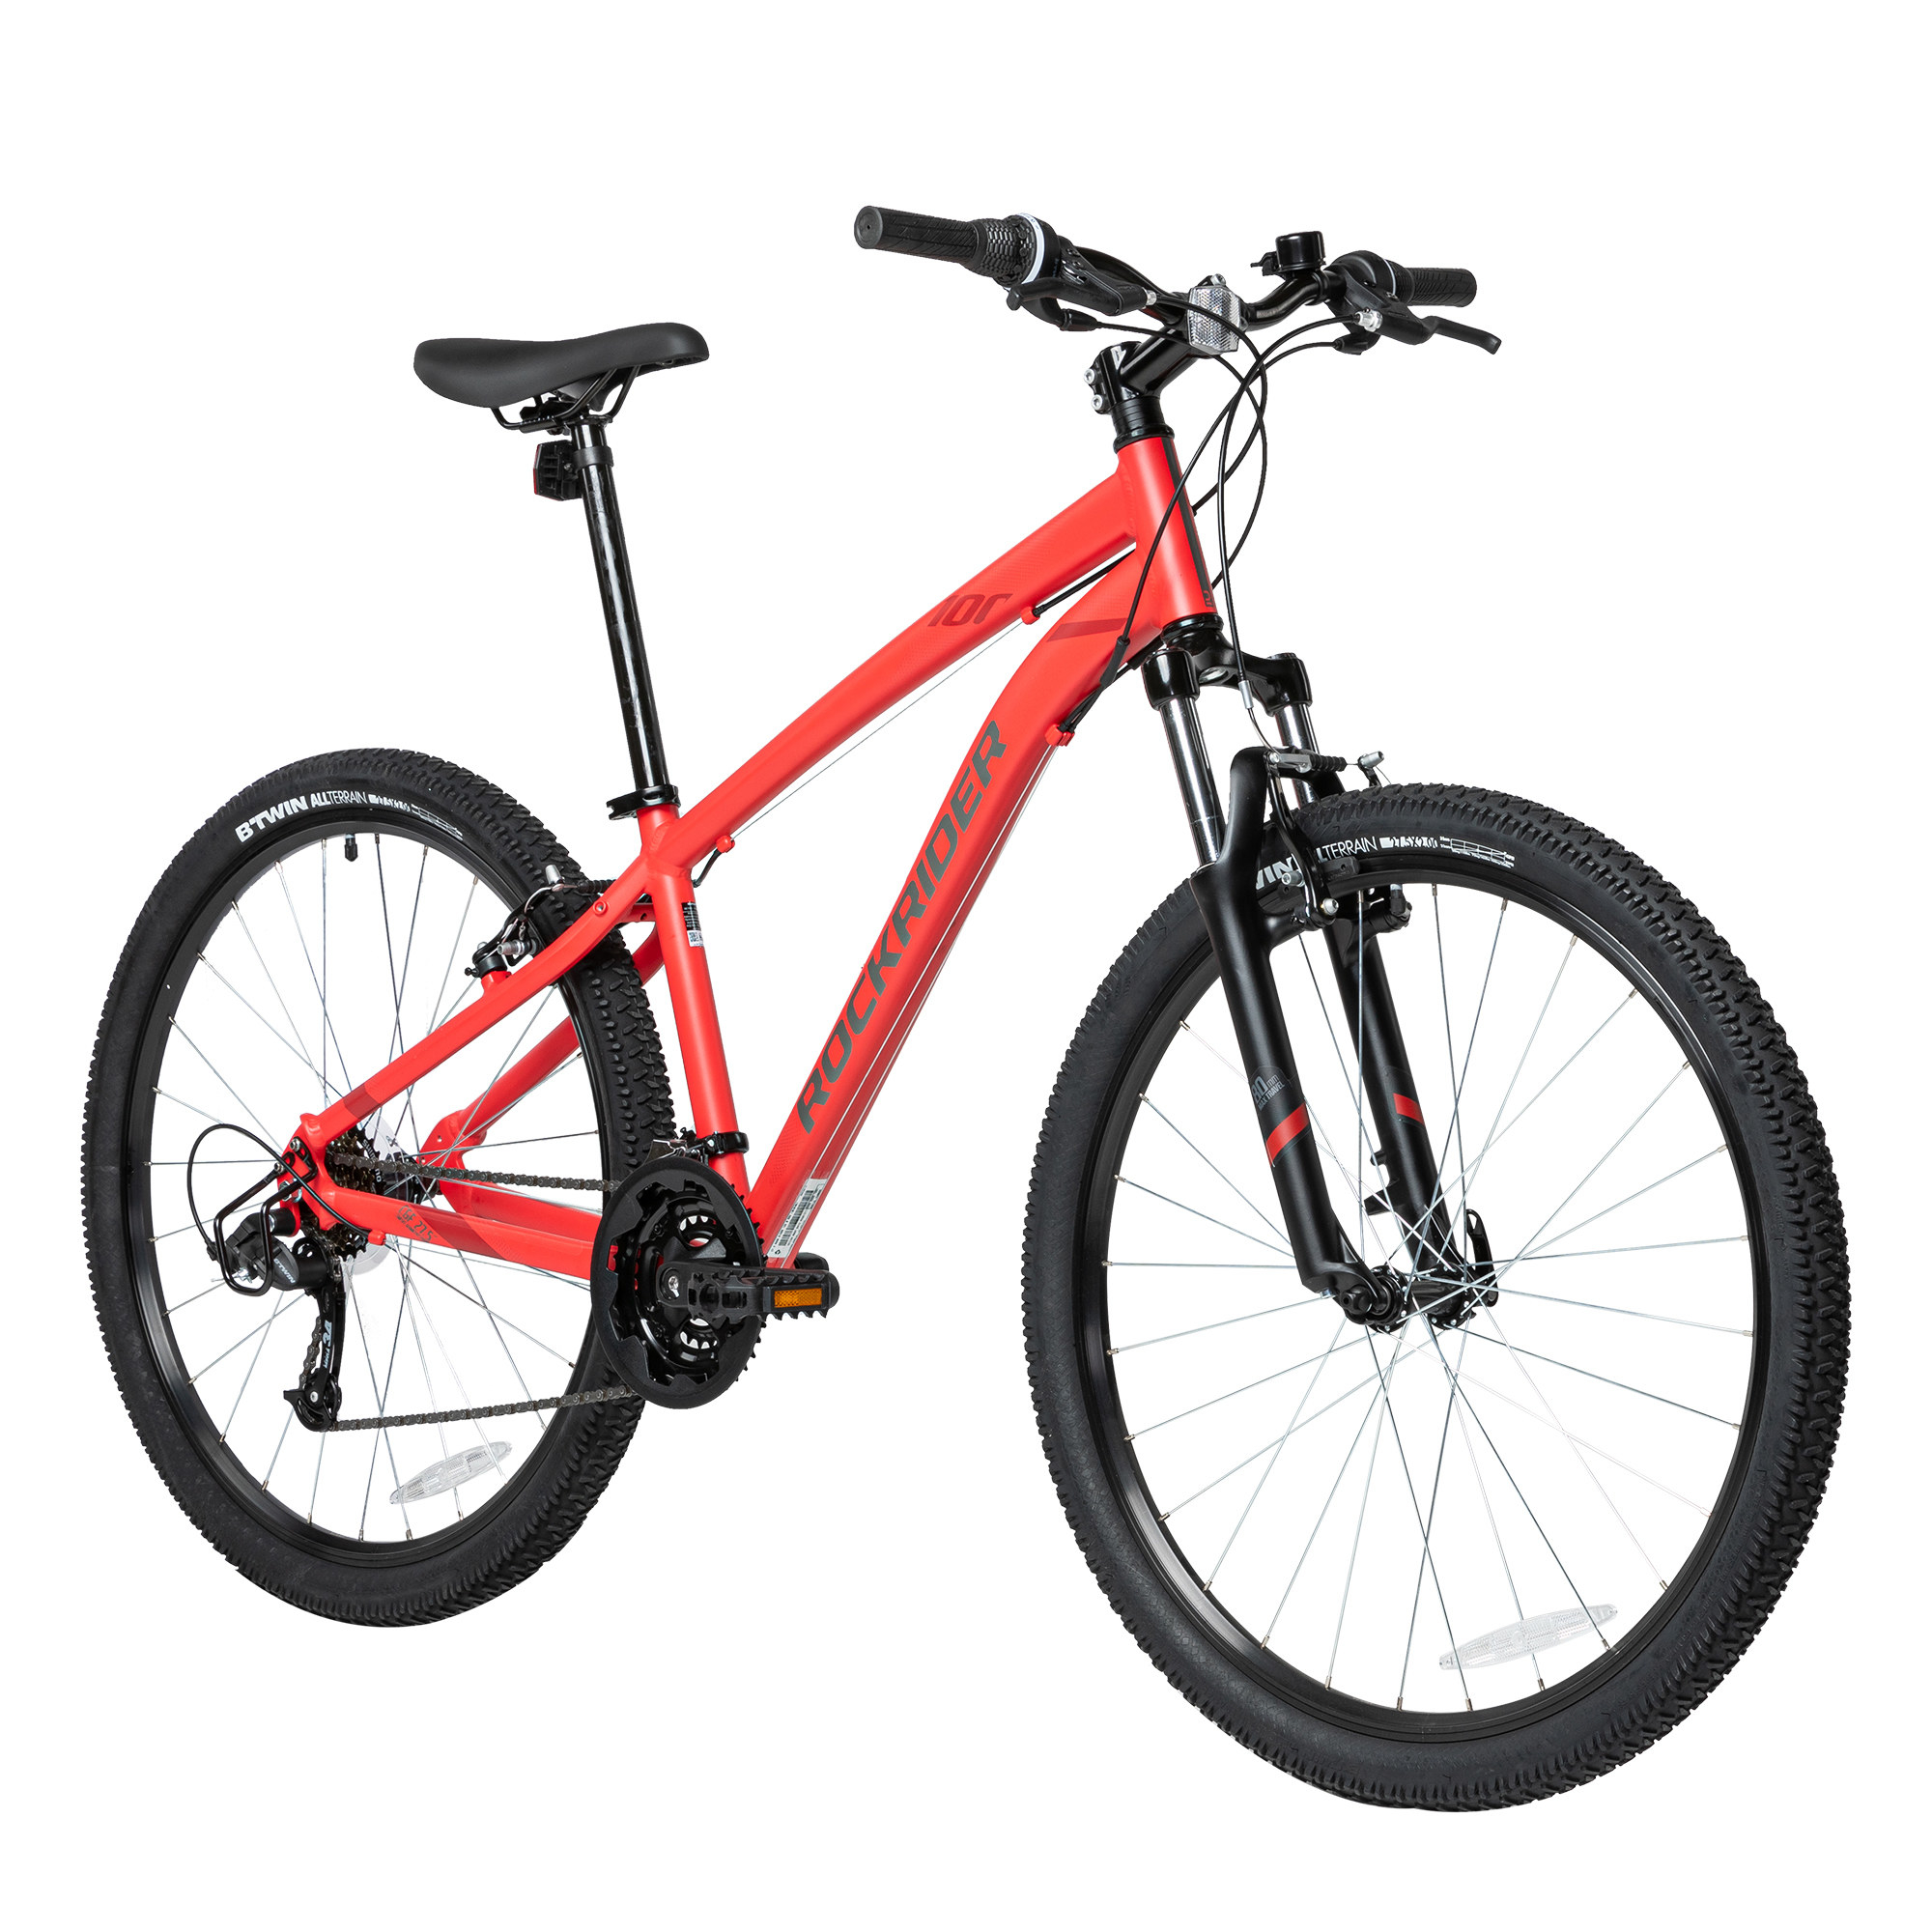 The red mountain bike